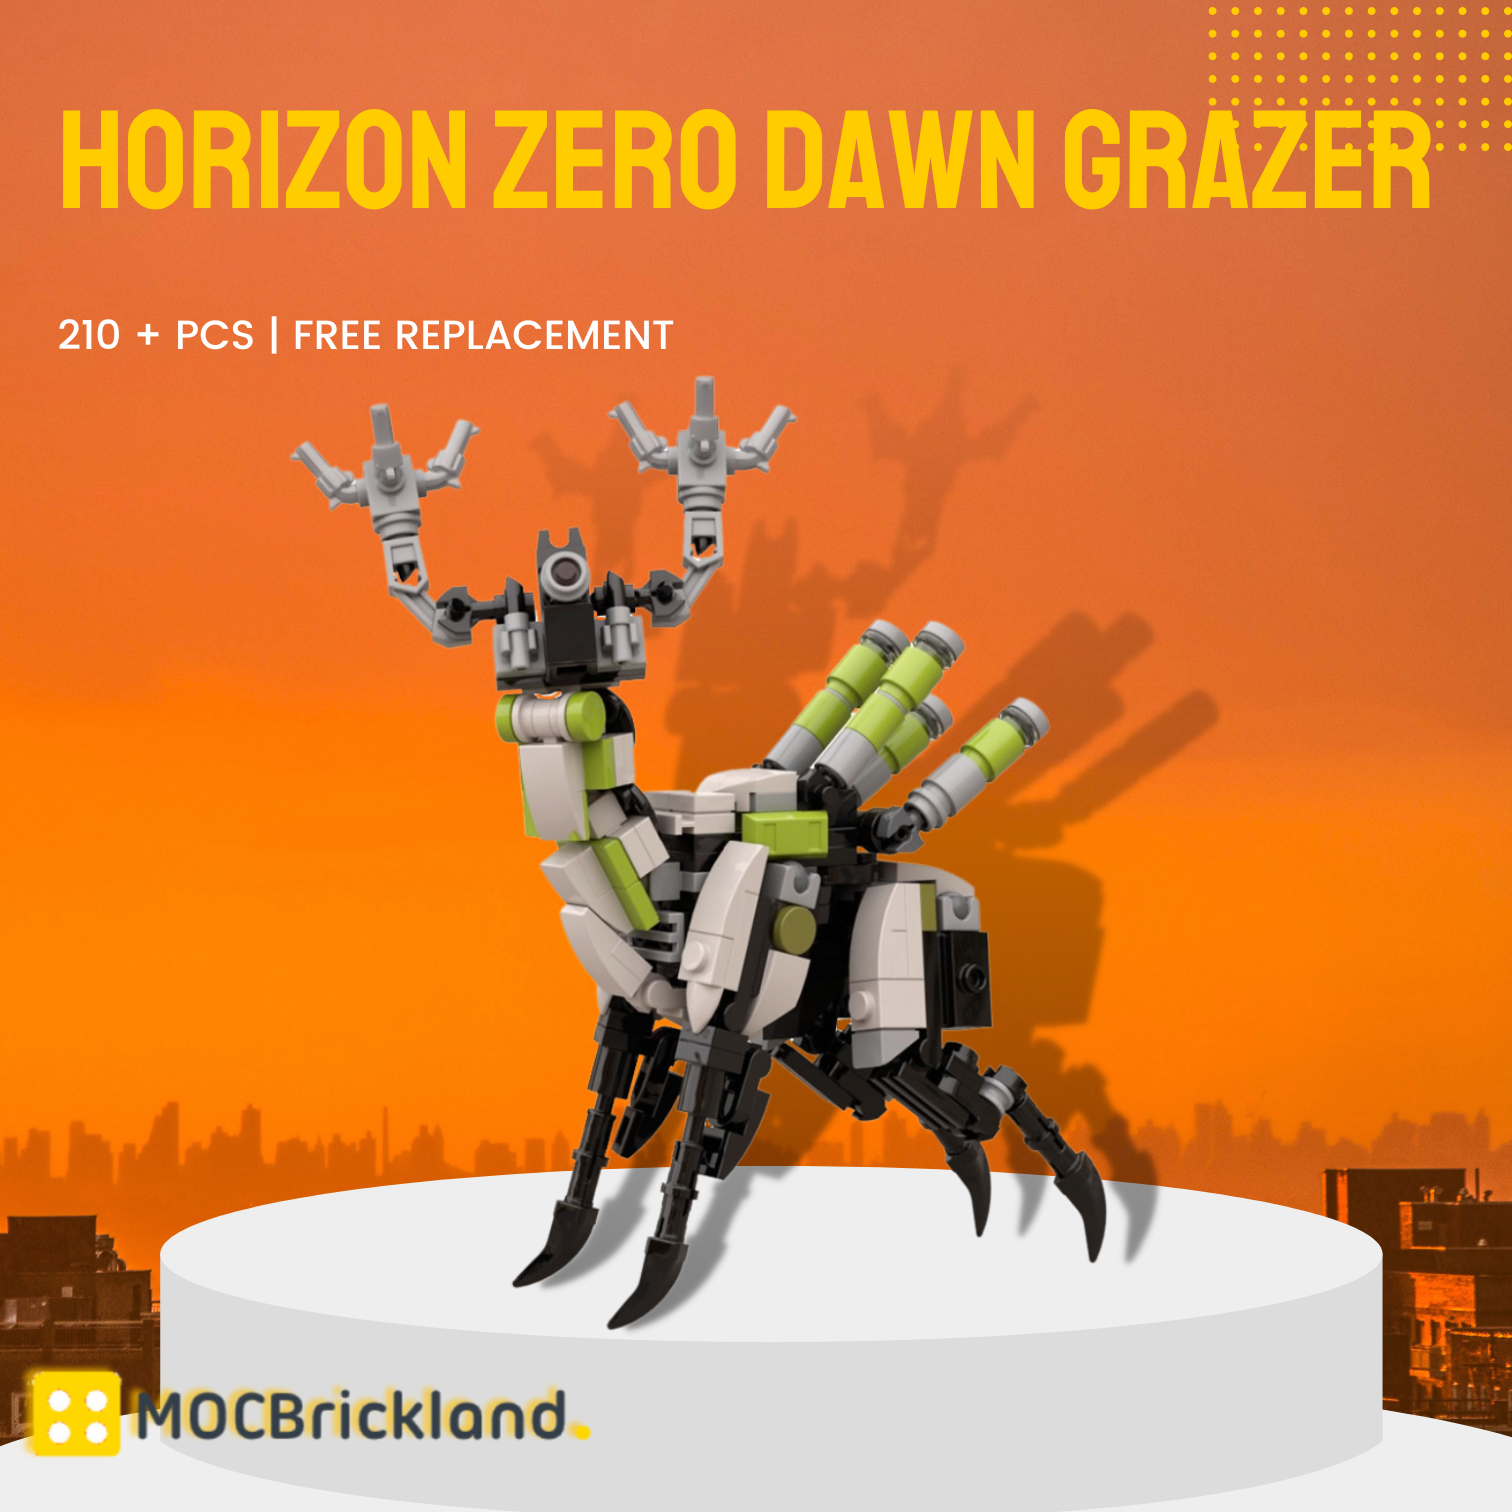 Creator MOC-89531 Horizon Zero Dawn Grazer MOCBRICKLAND